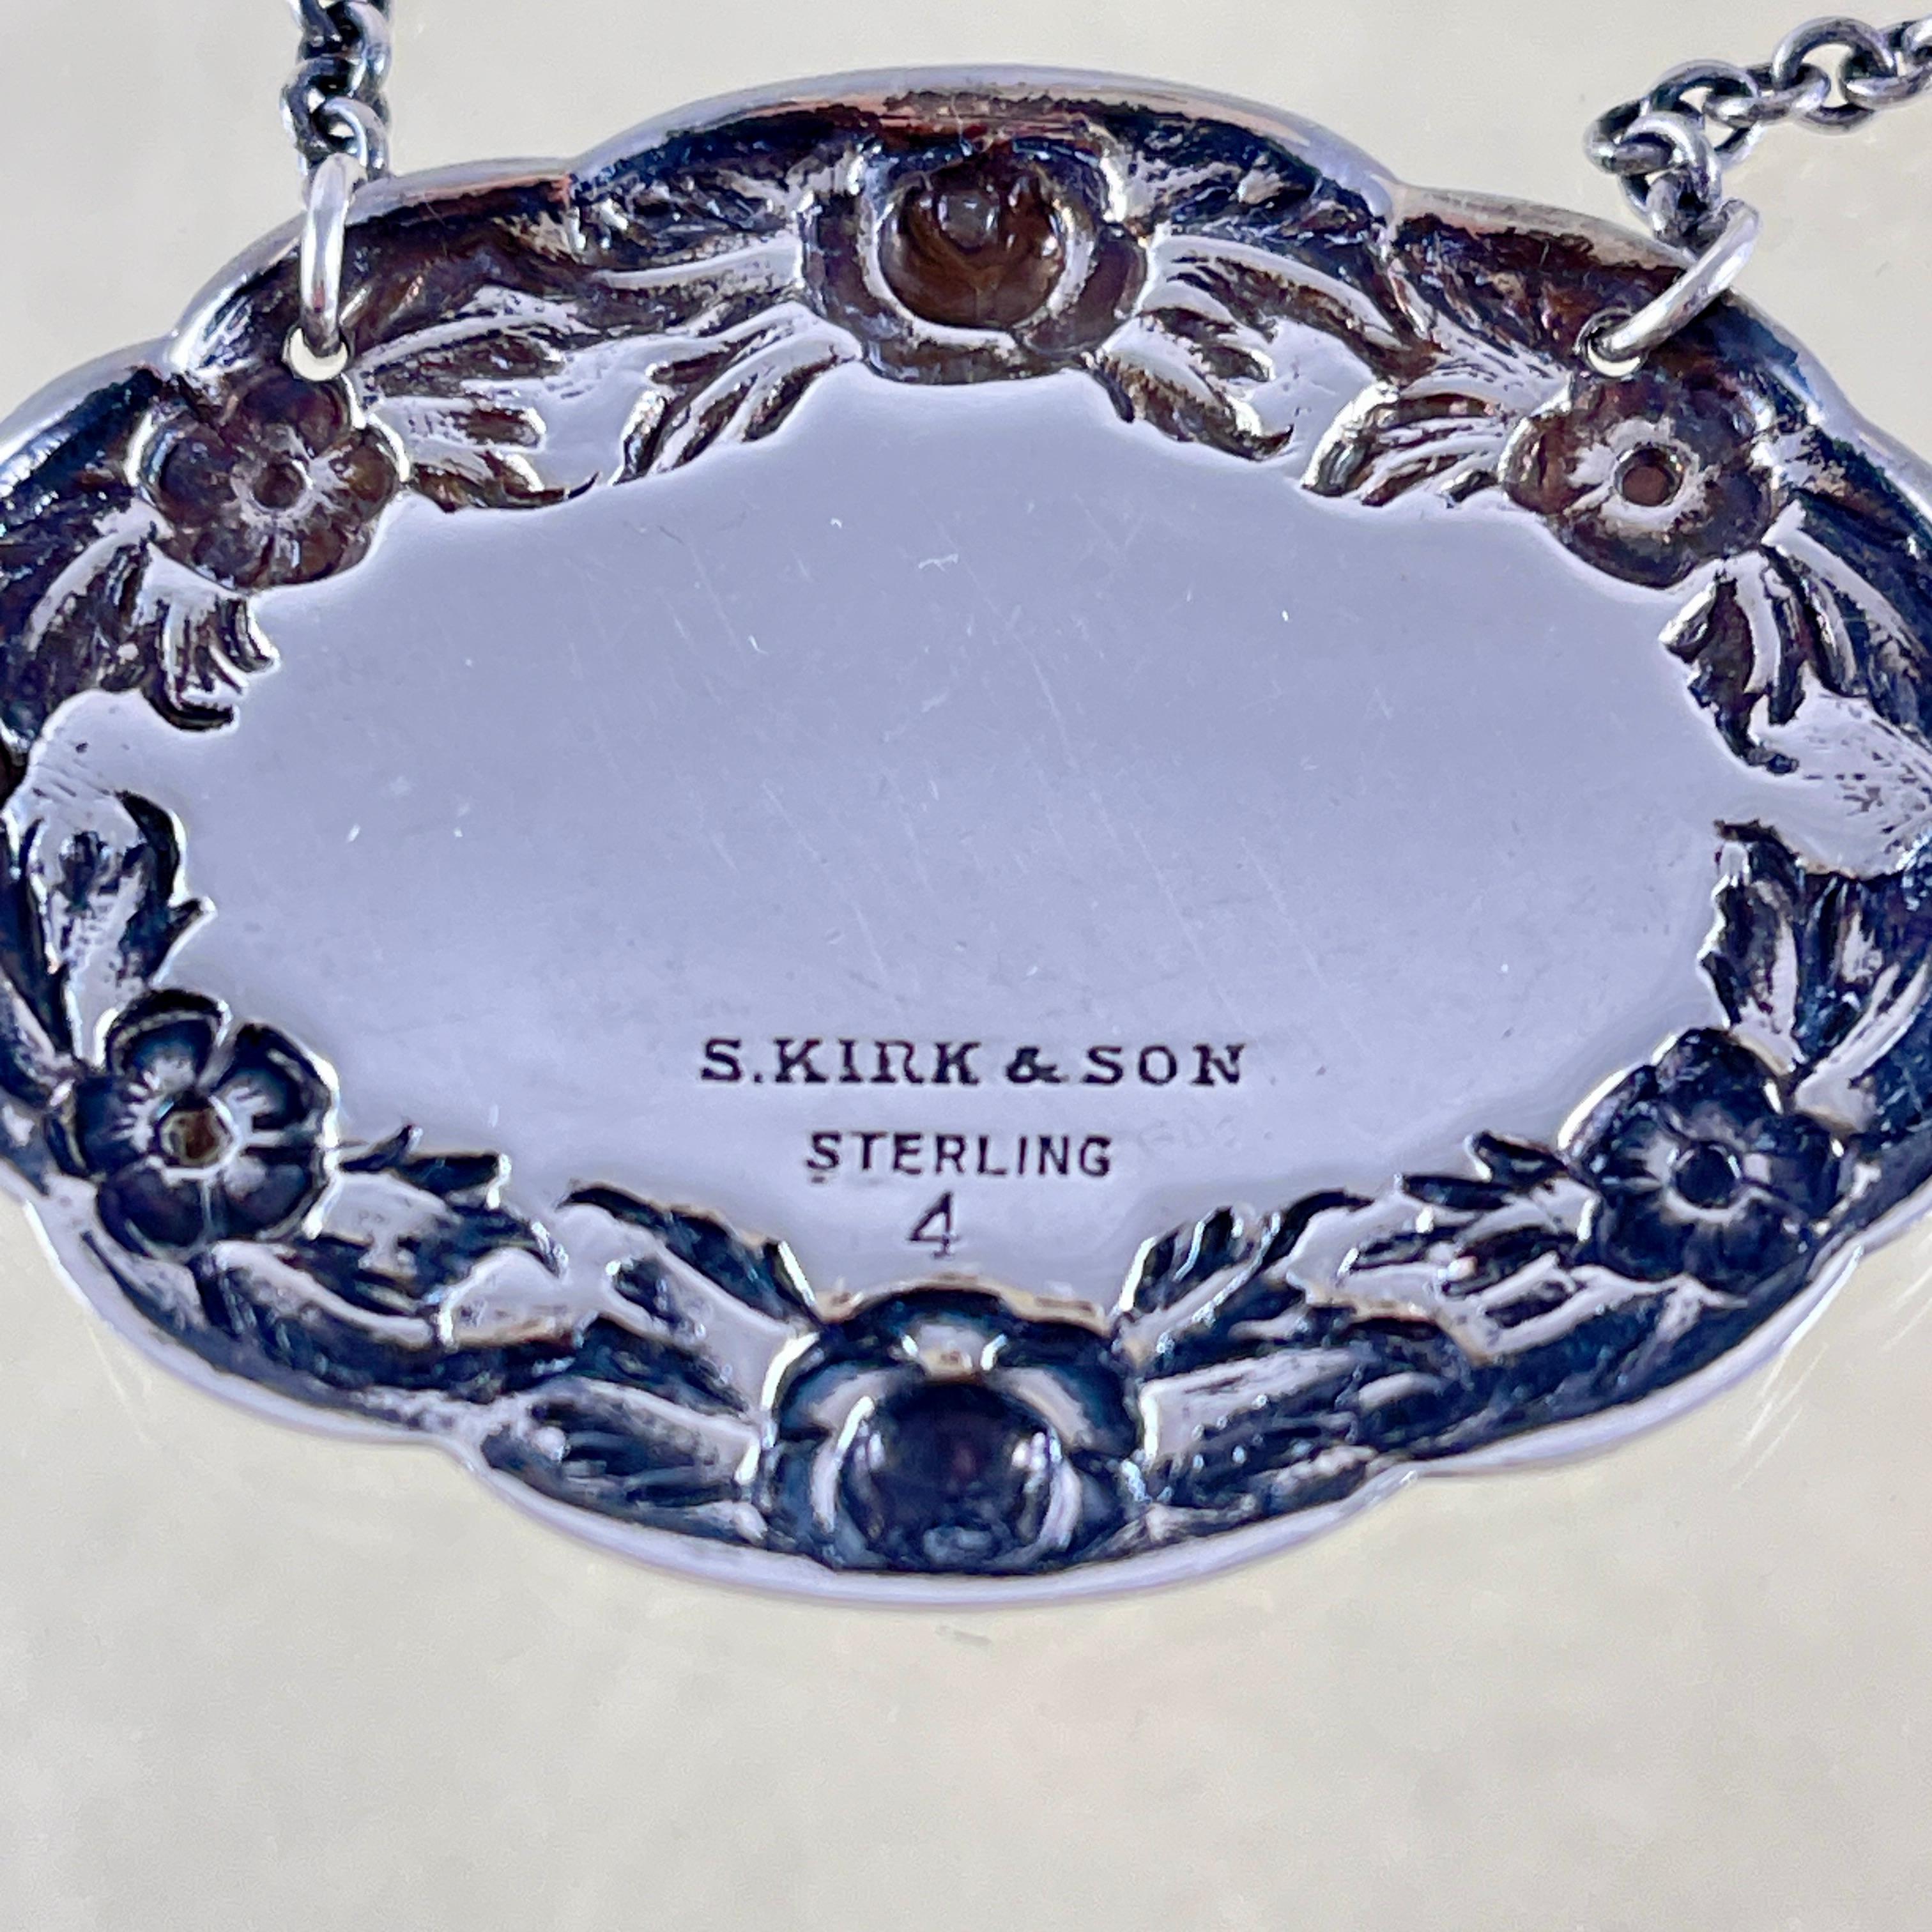 S. Kirk & Sons Sterling Silber Liquor Collar Tag, graviert Scotch - 1860s (19. Jahrhundert) im Angebot